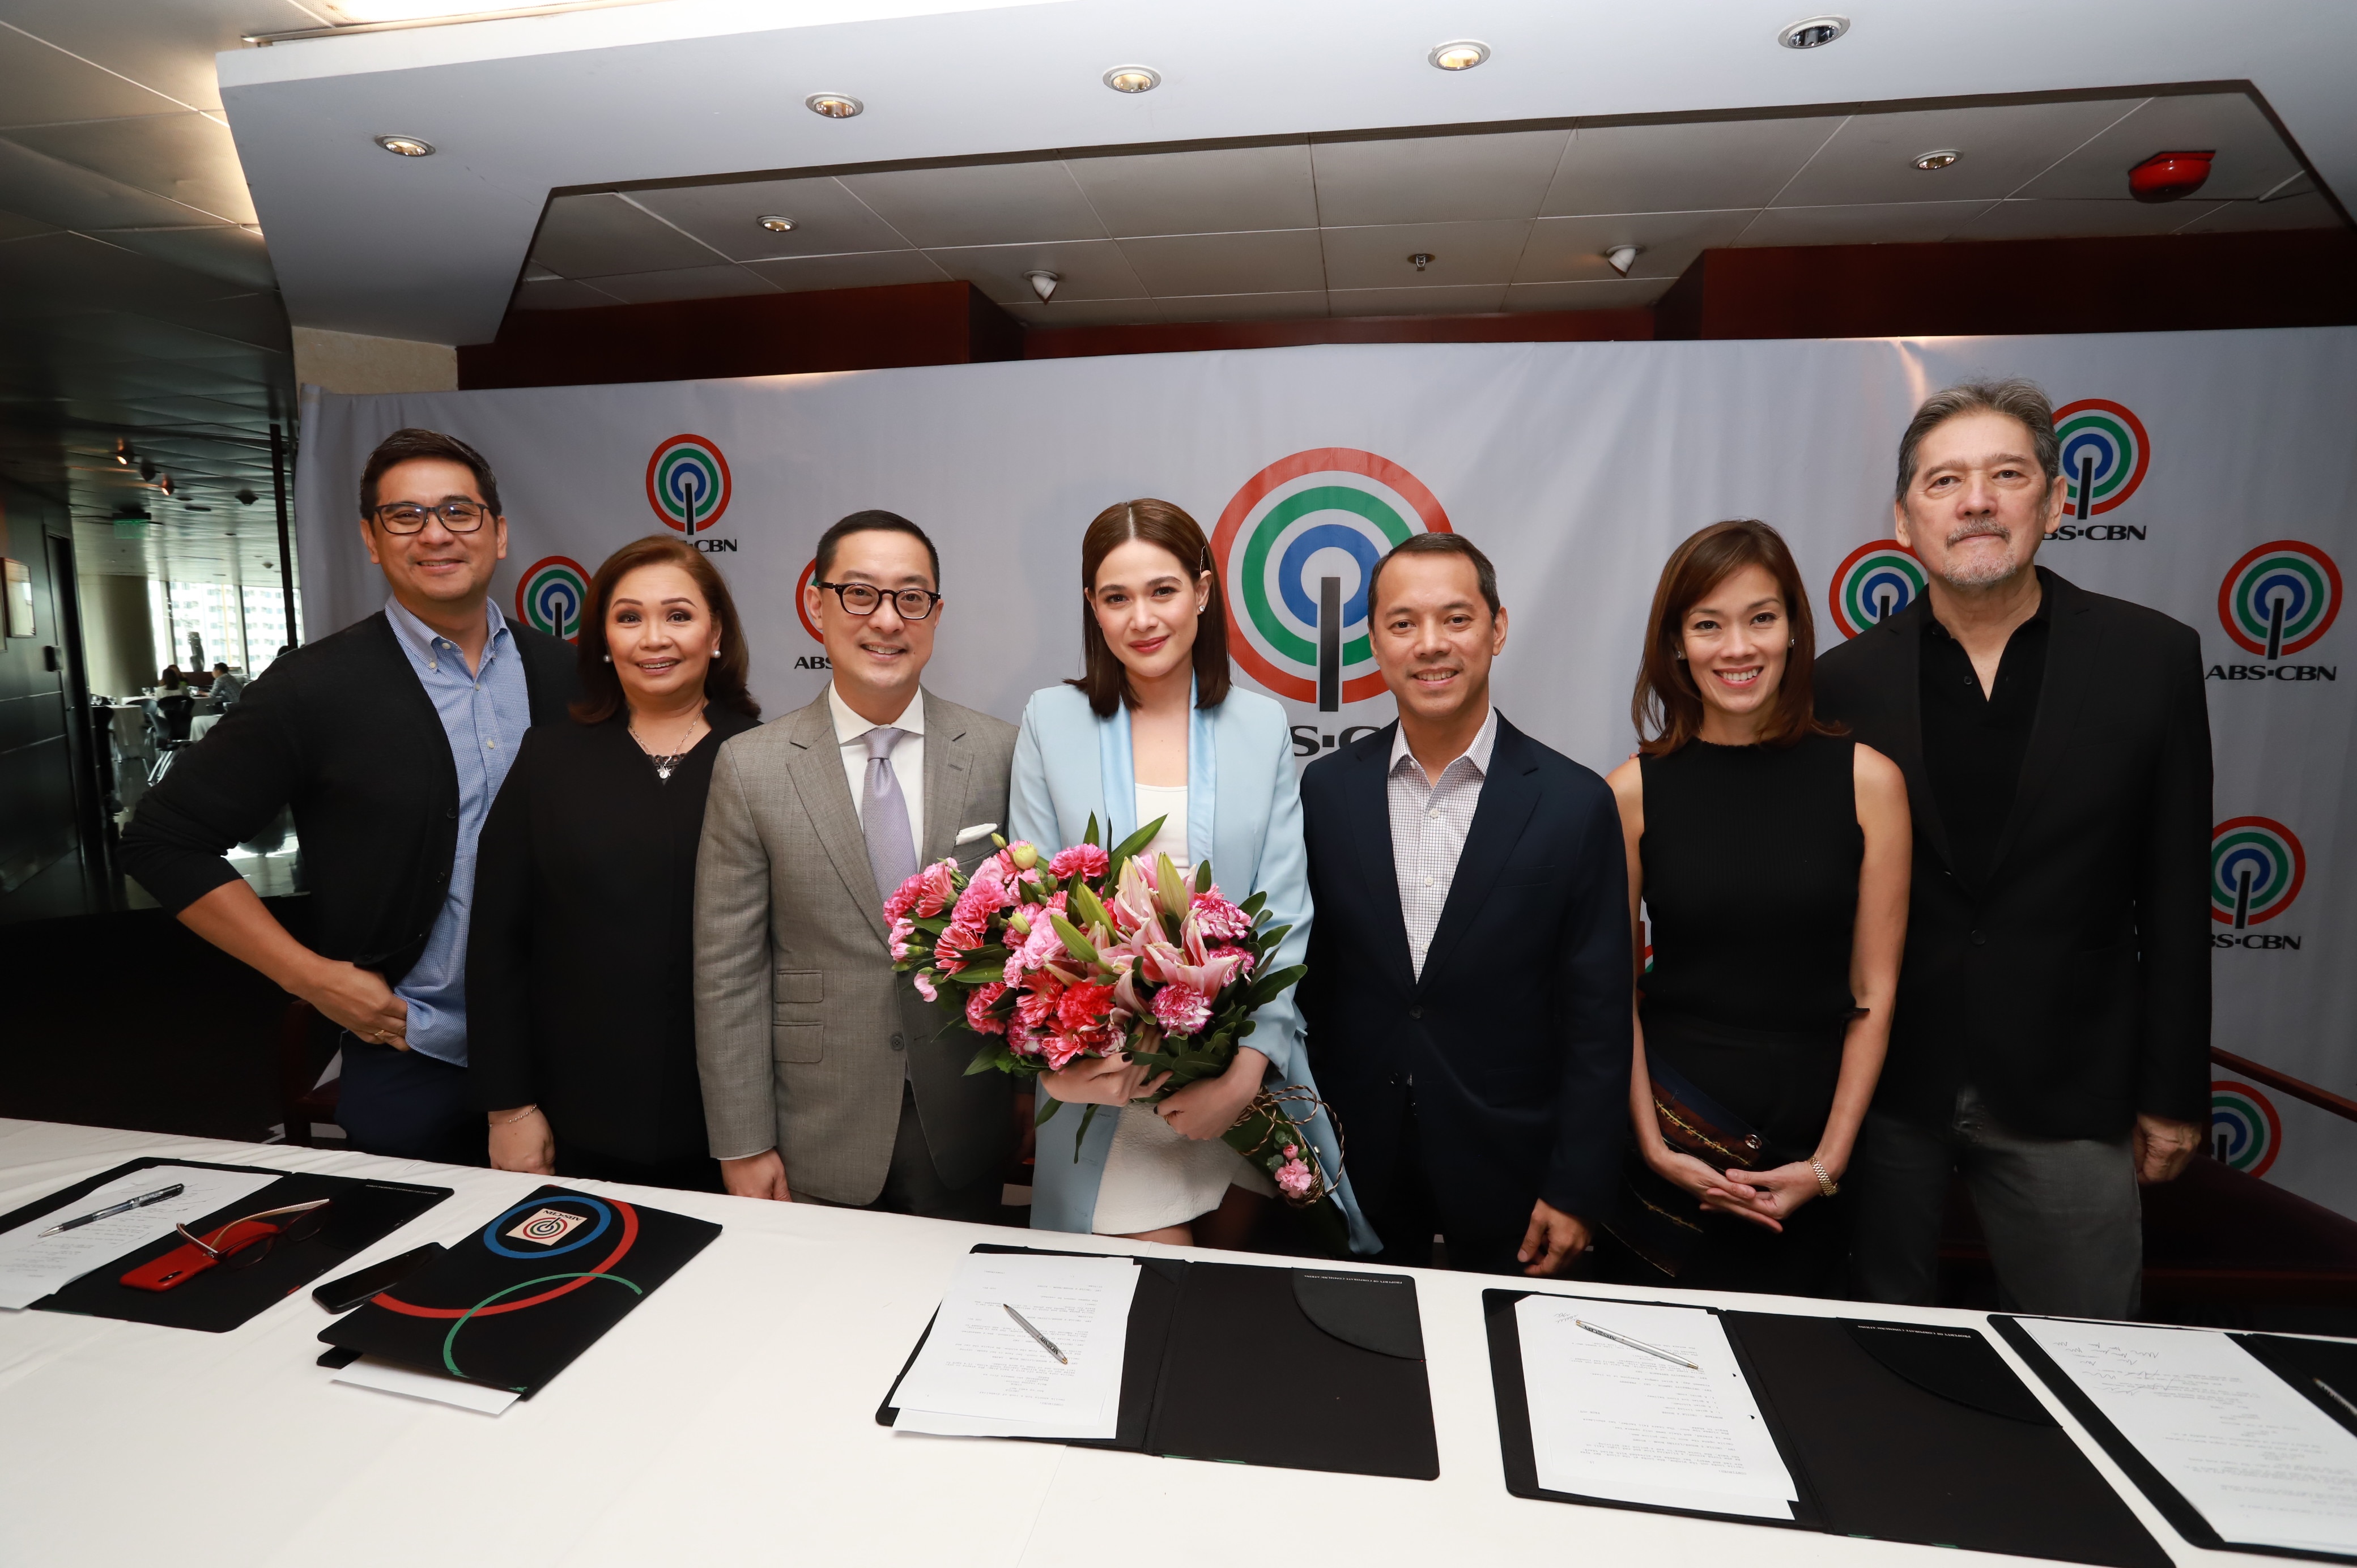 Bea Alonzo with ABS CBN executives